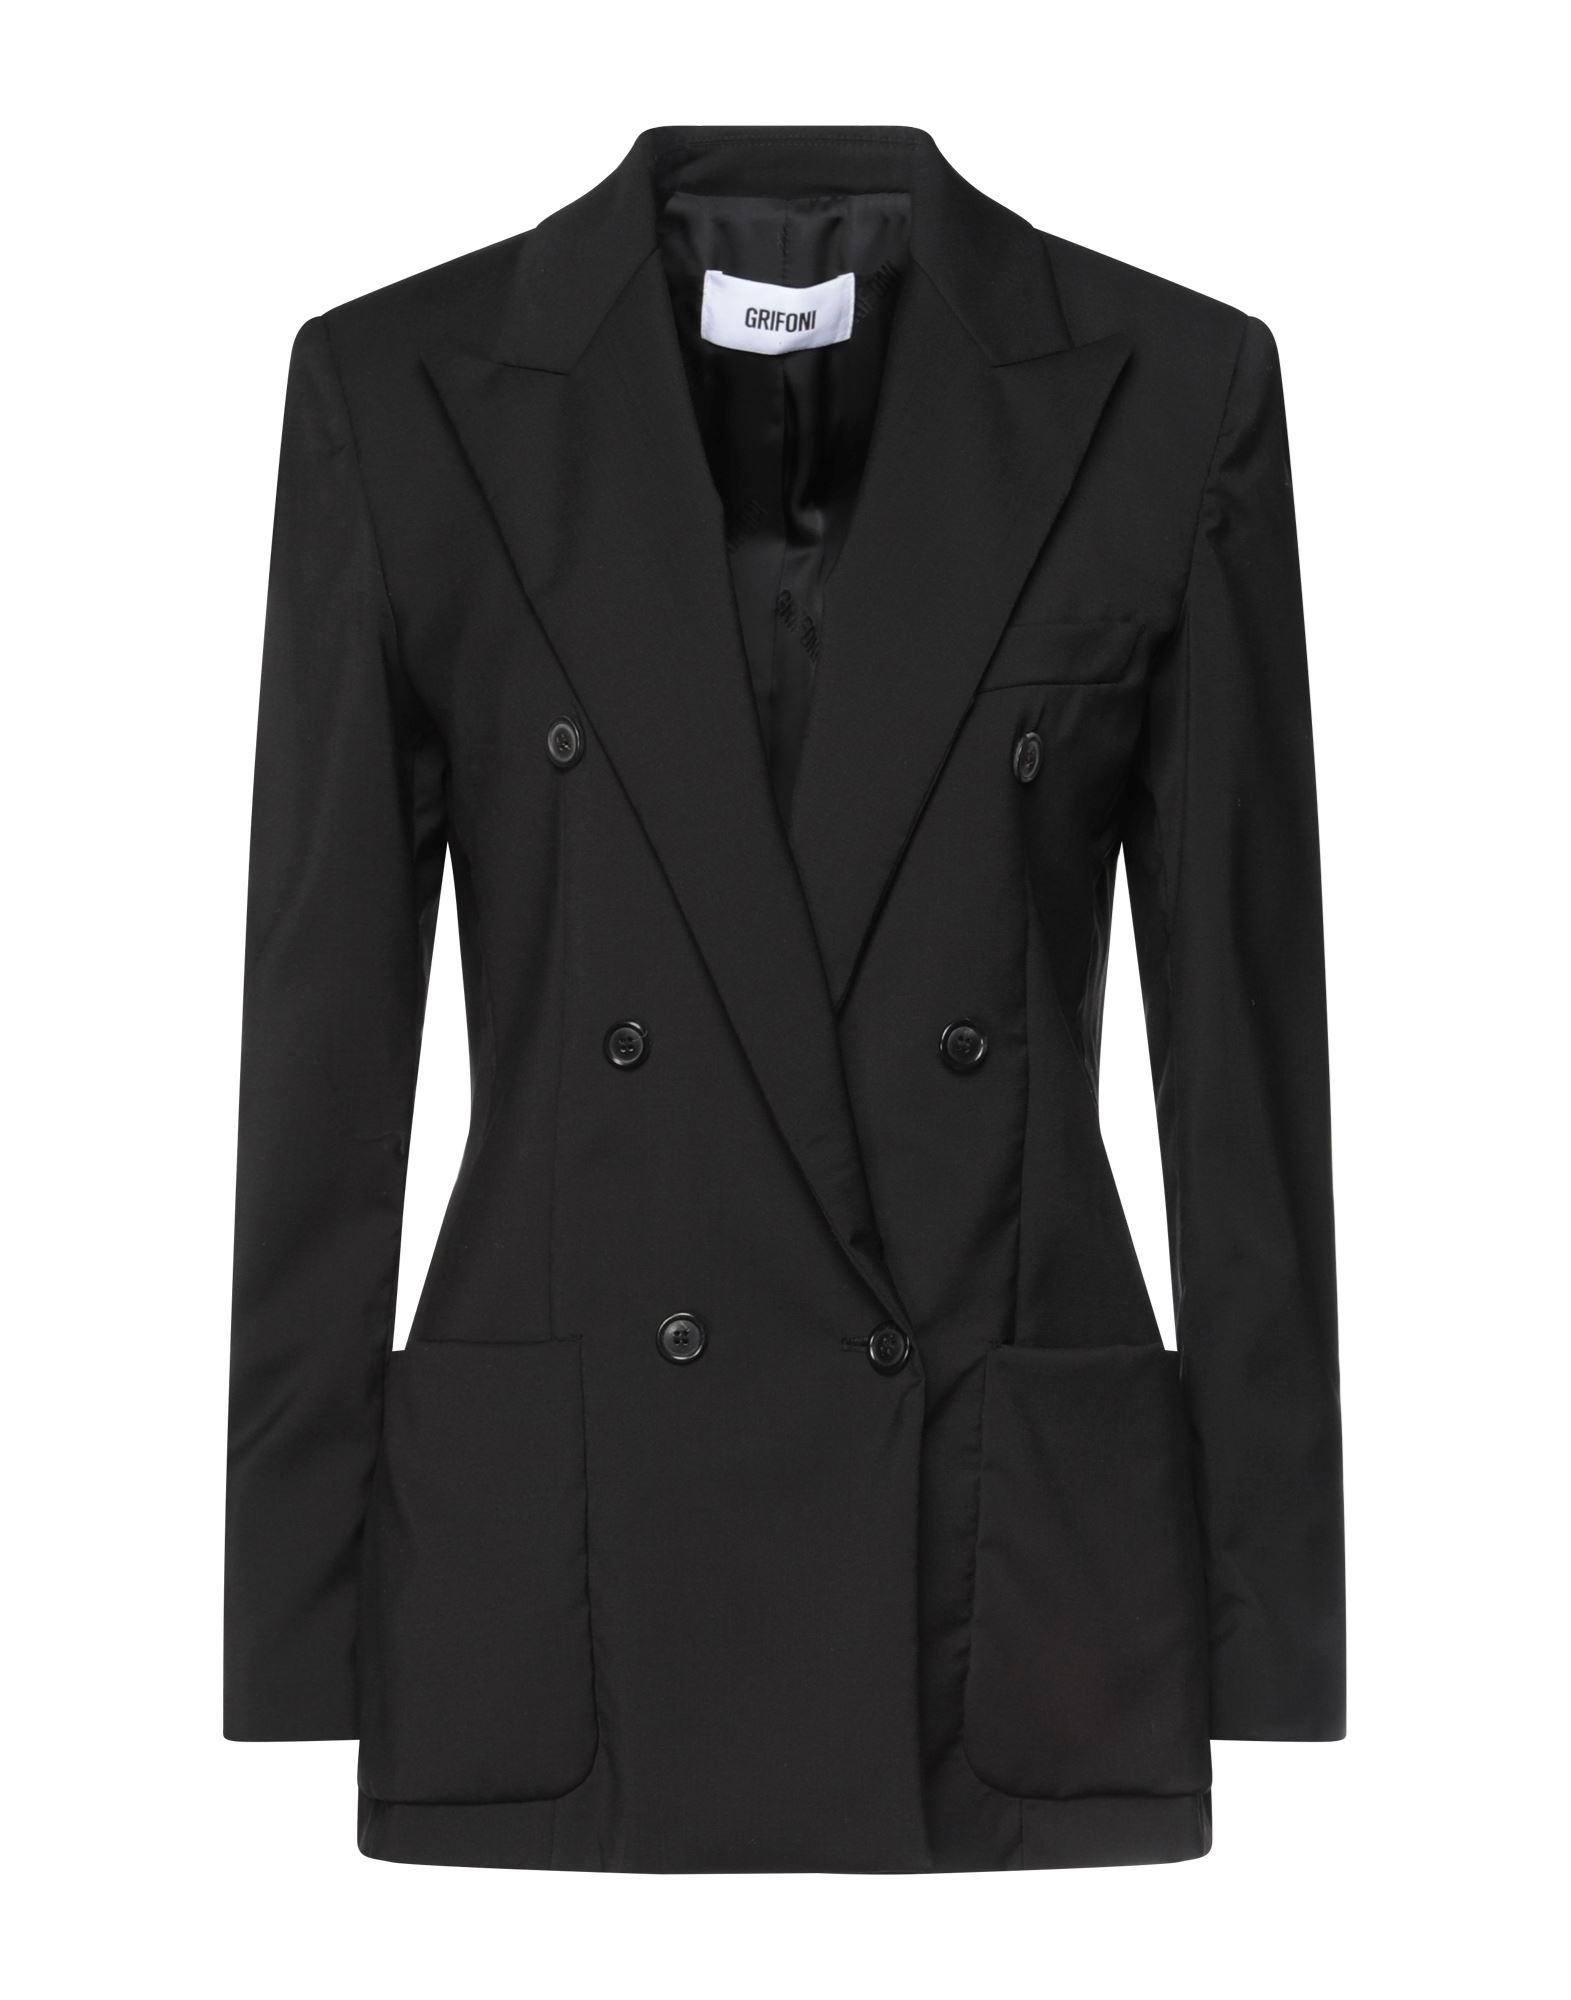 MAURO GRIFONI Suit jackets